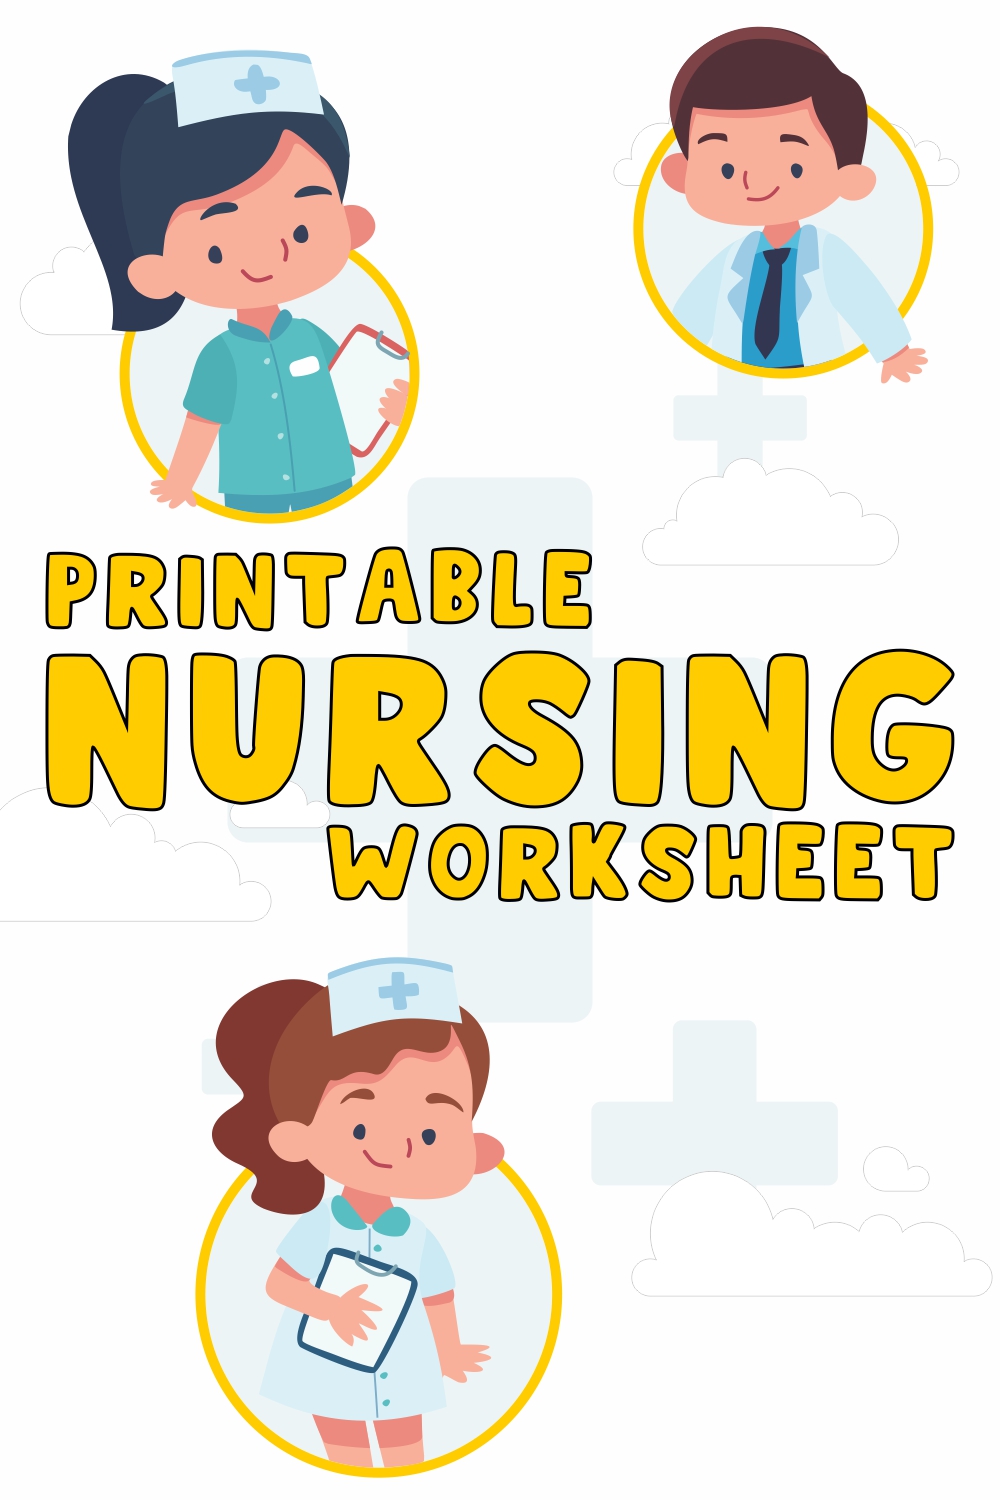 15 Images of Printable Nursing Worksheets